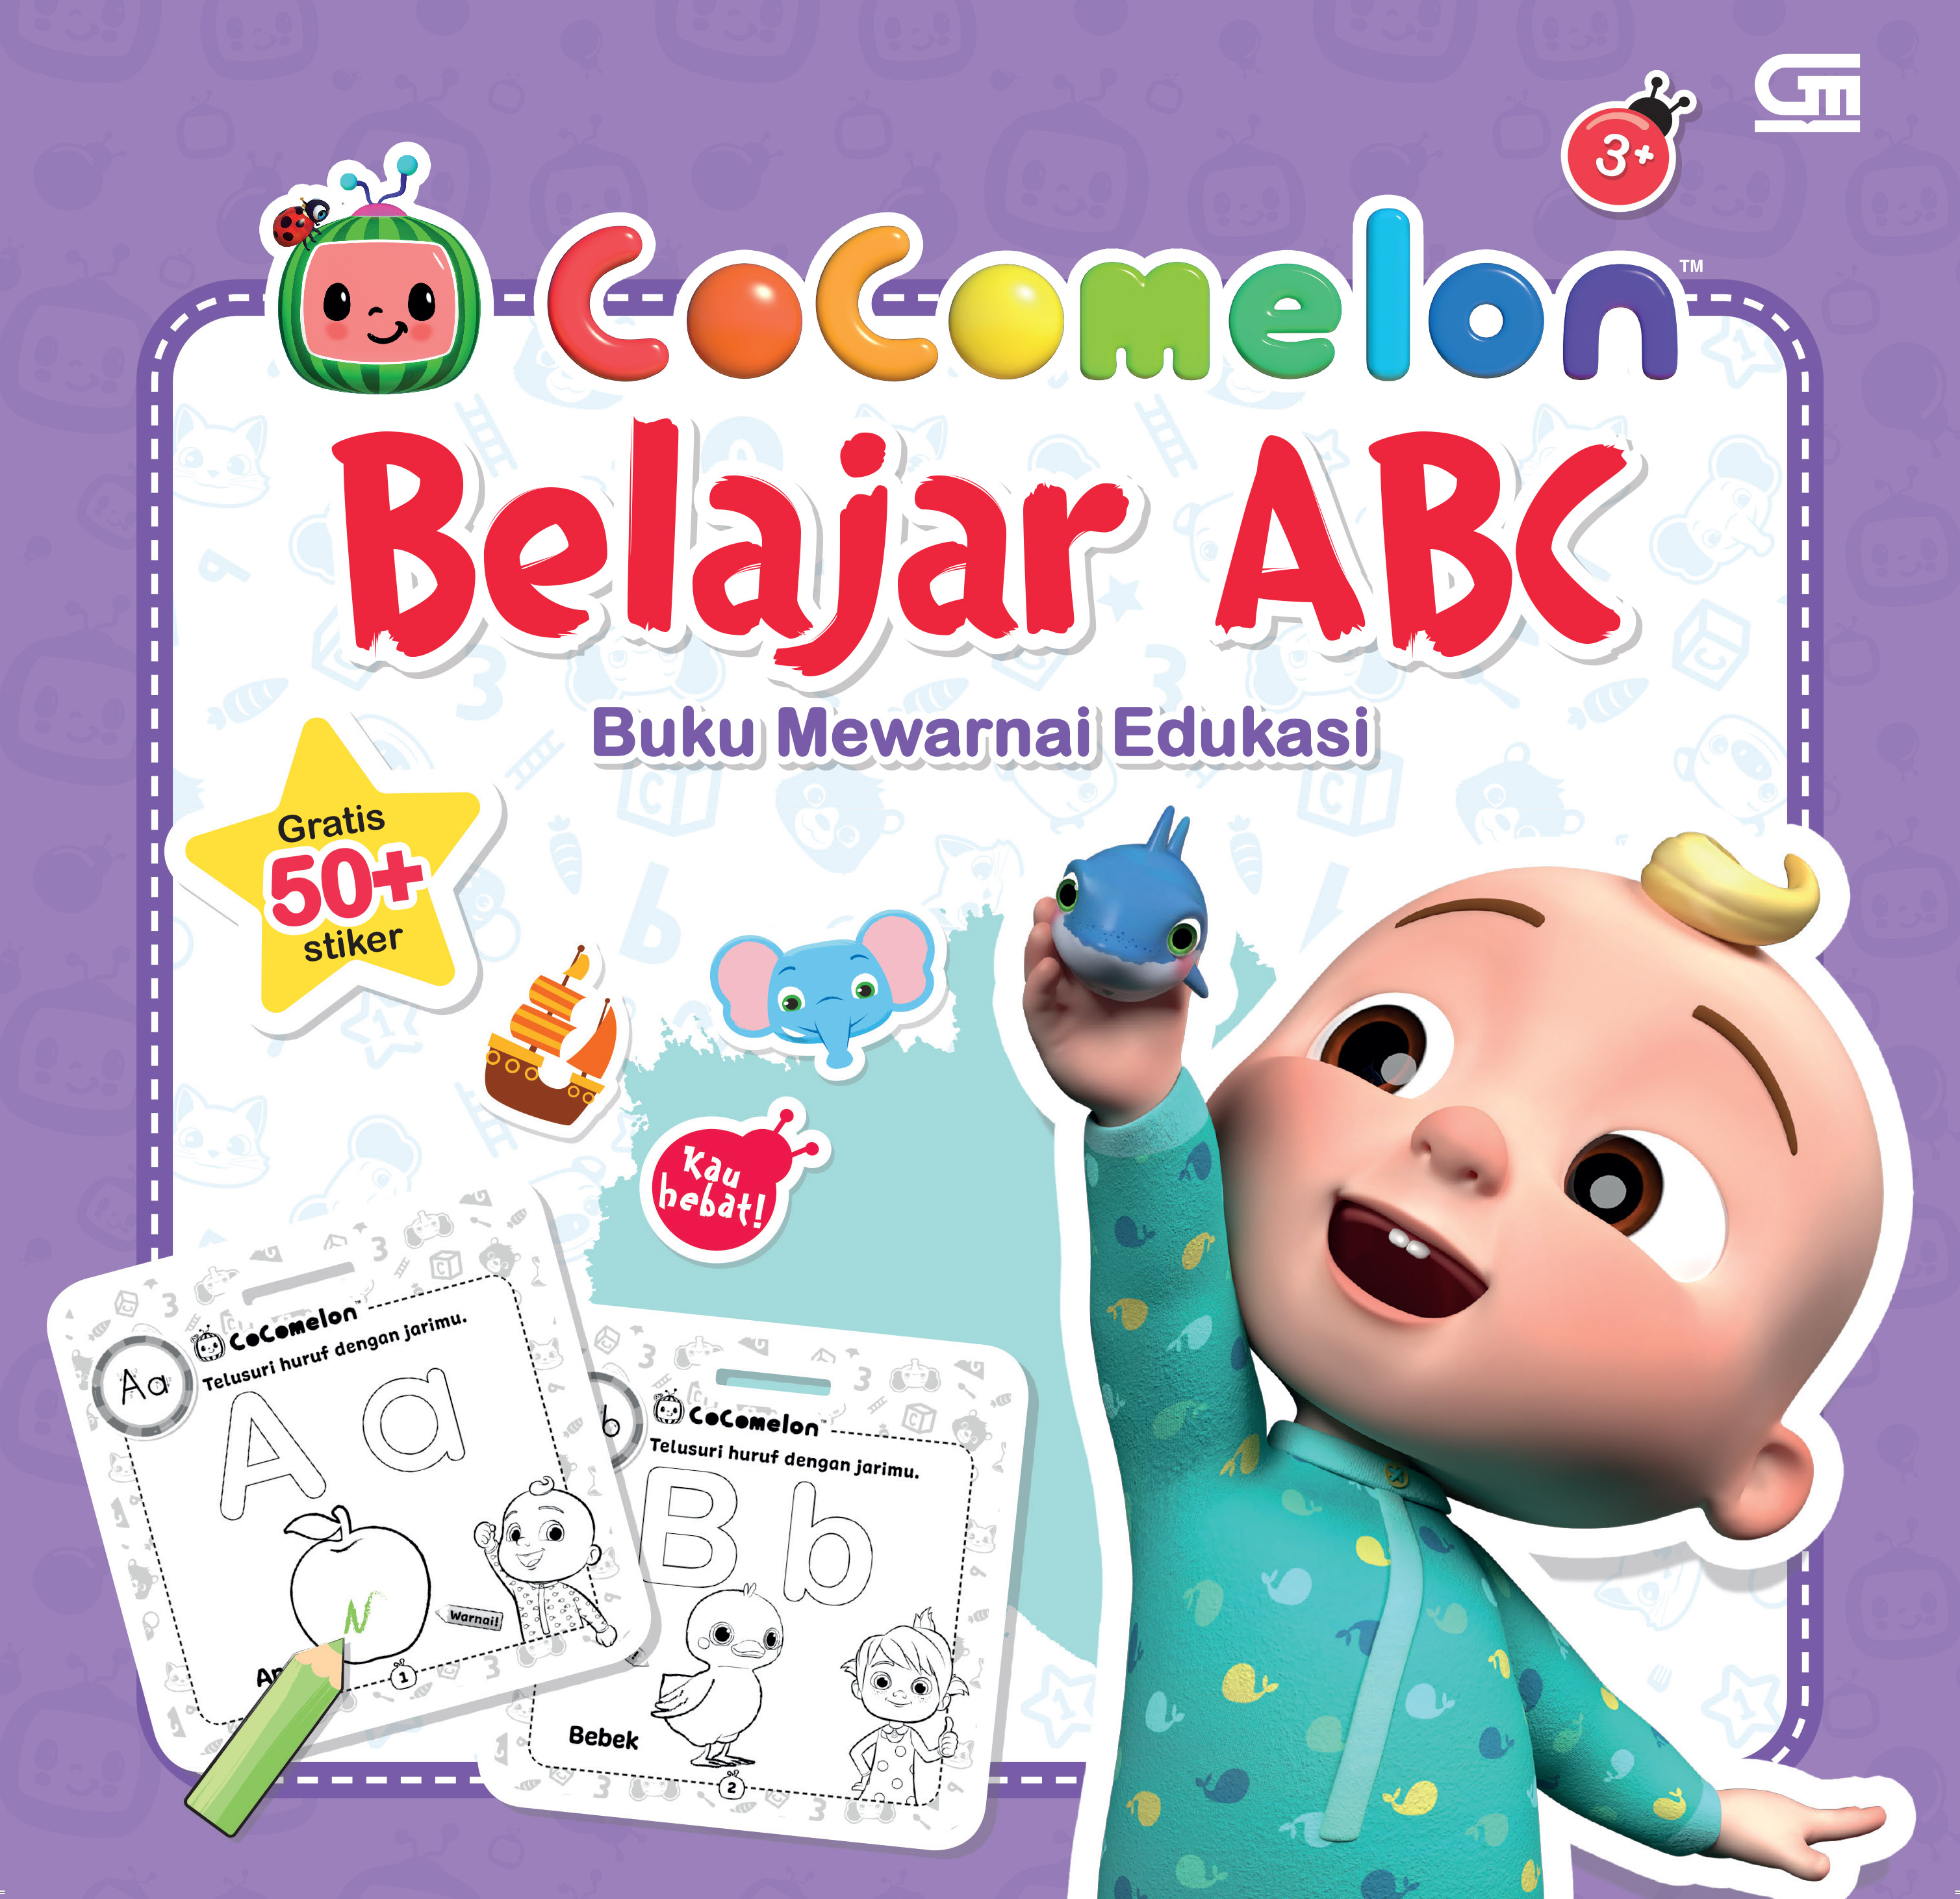 Cocomelon: Belajar ABC